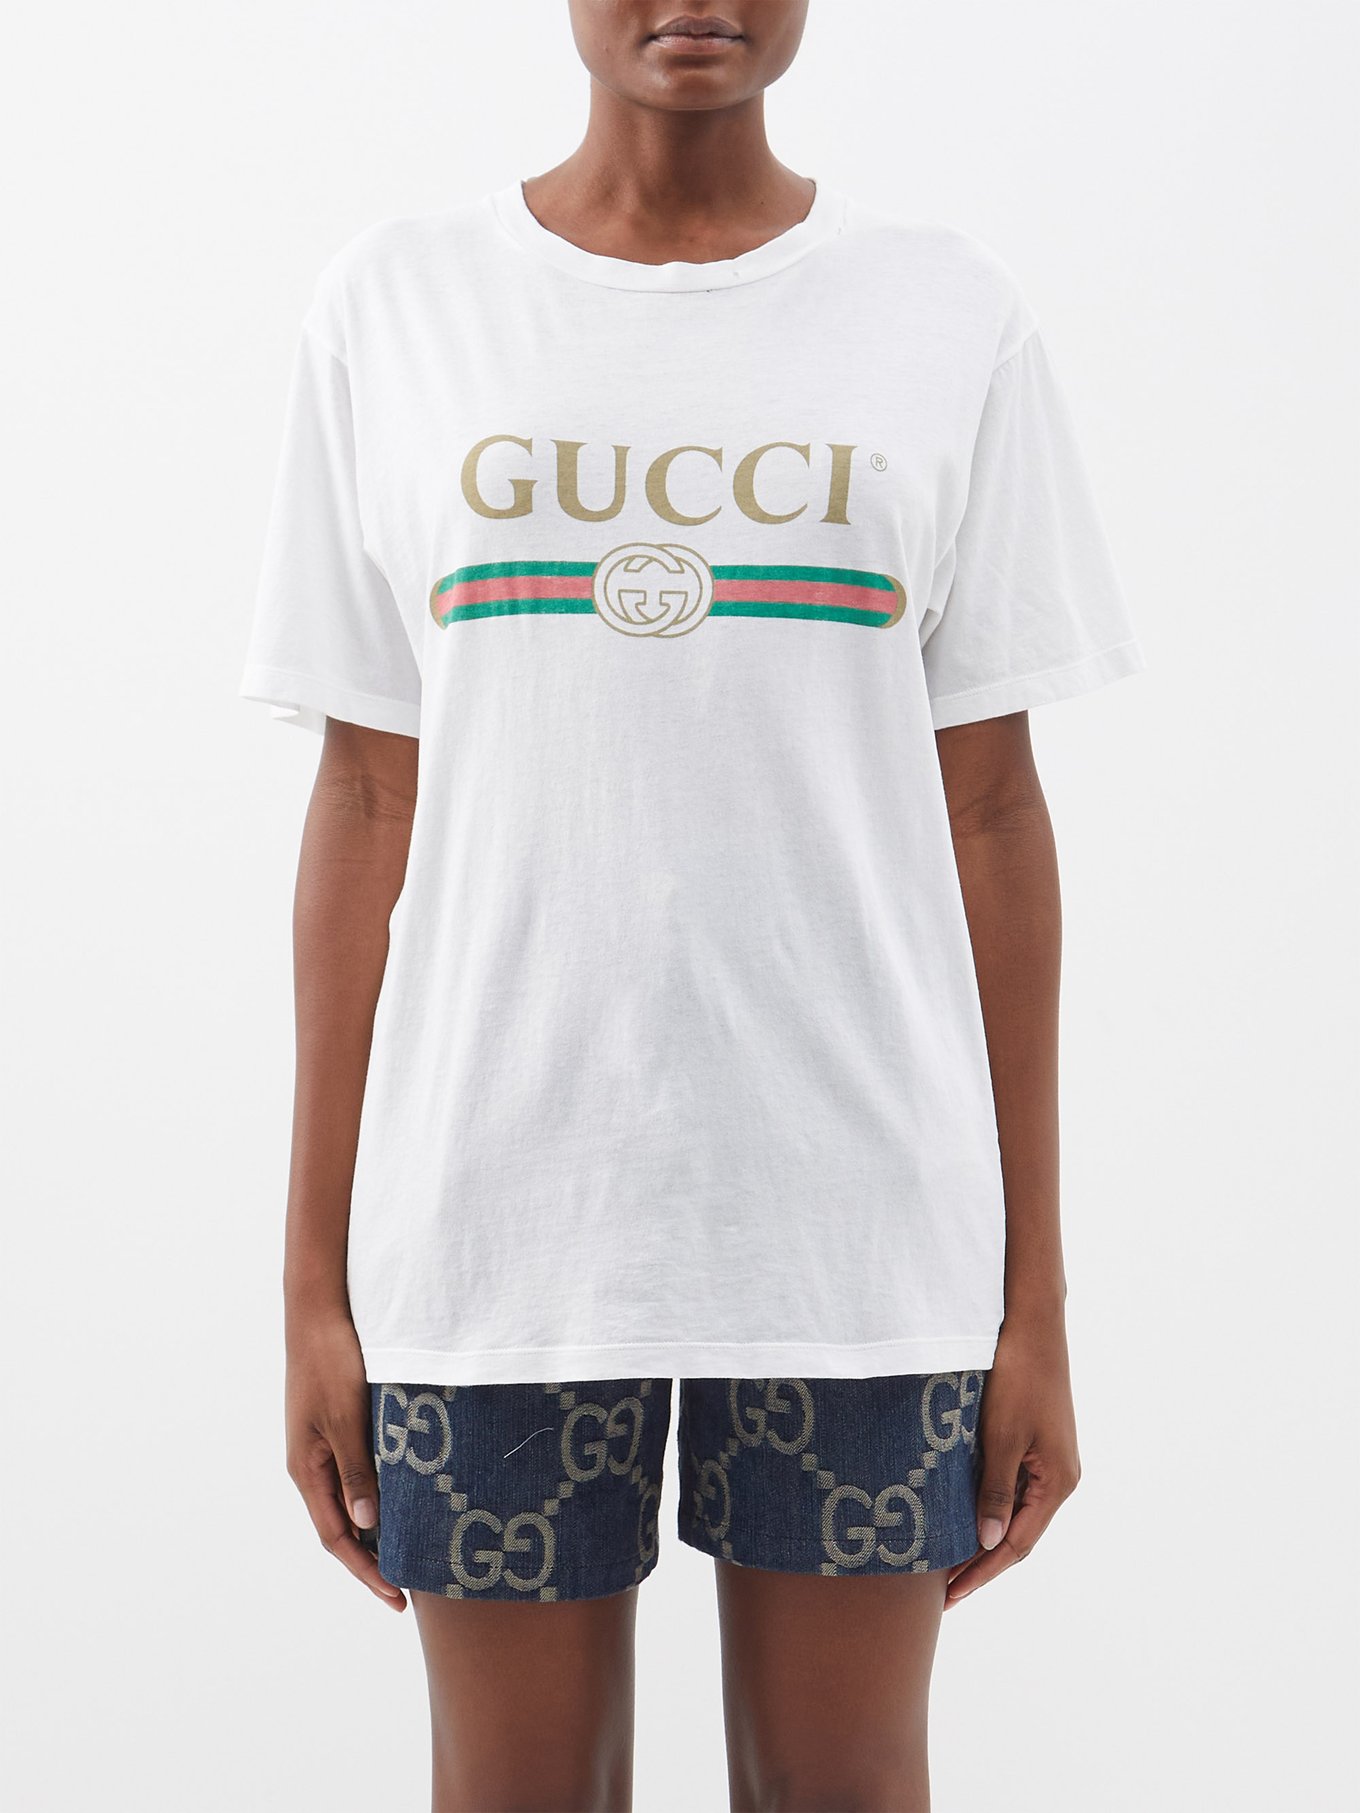 Gucci グッチ ヴィンテージロゴ コットンTシャツ ホワイト